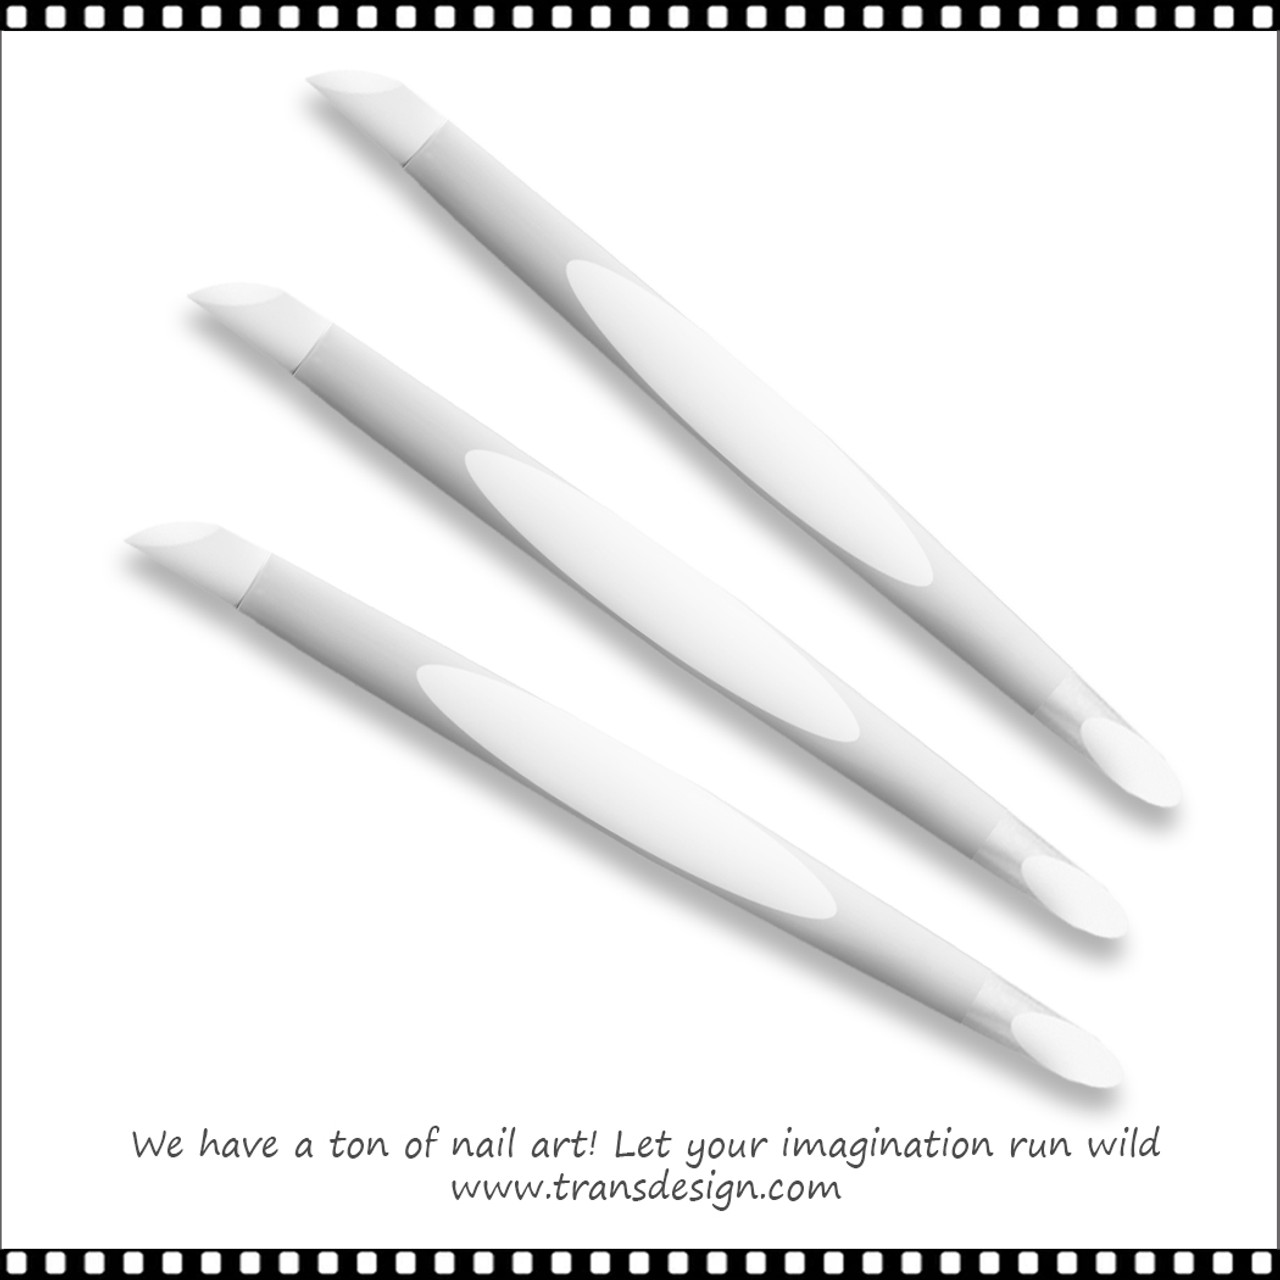 Dual-ended Rhinestone Picker Dotting Pen White - TDI, Inc